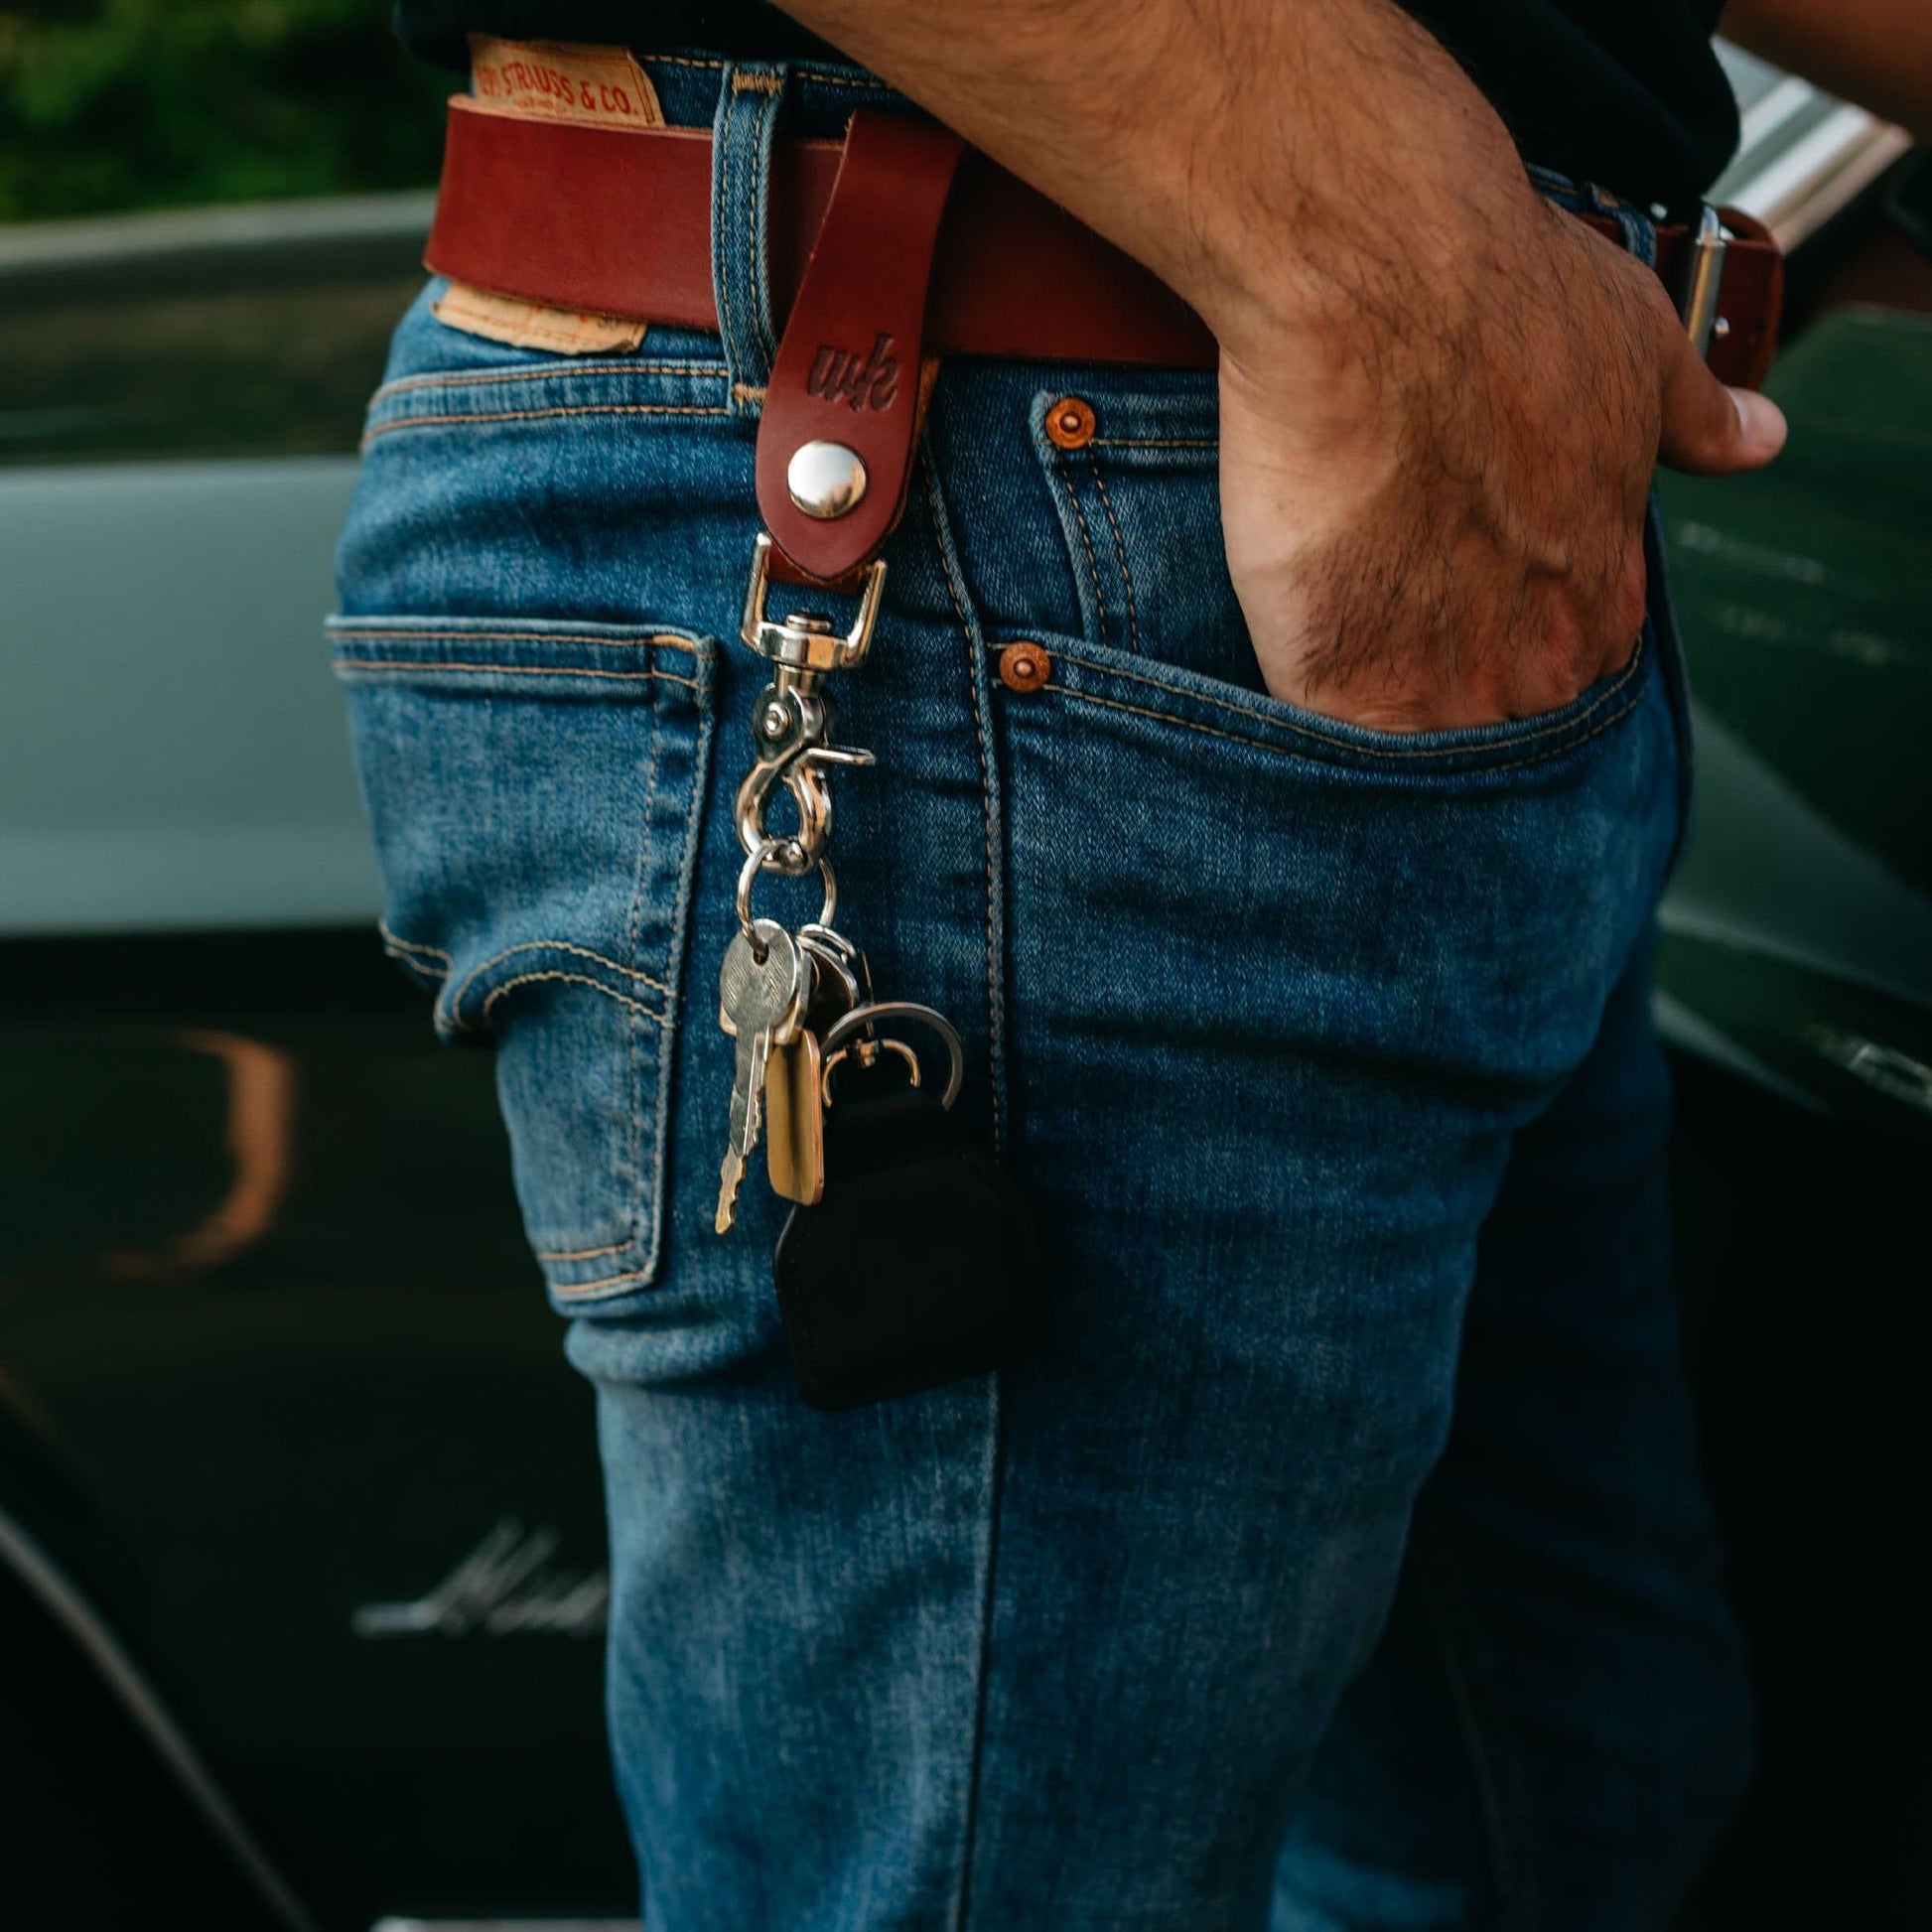 Rouxco Leather | Leather Key Clip